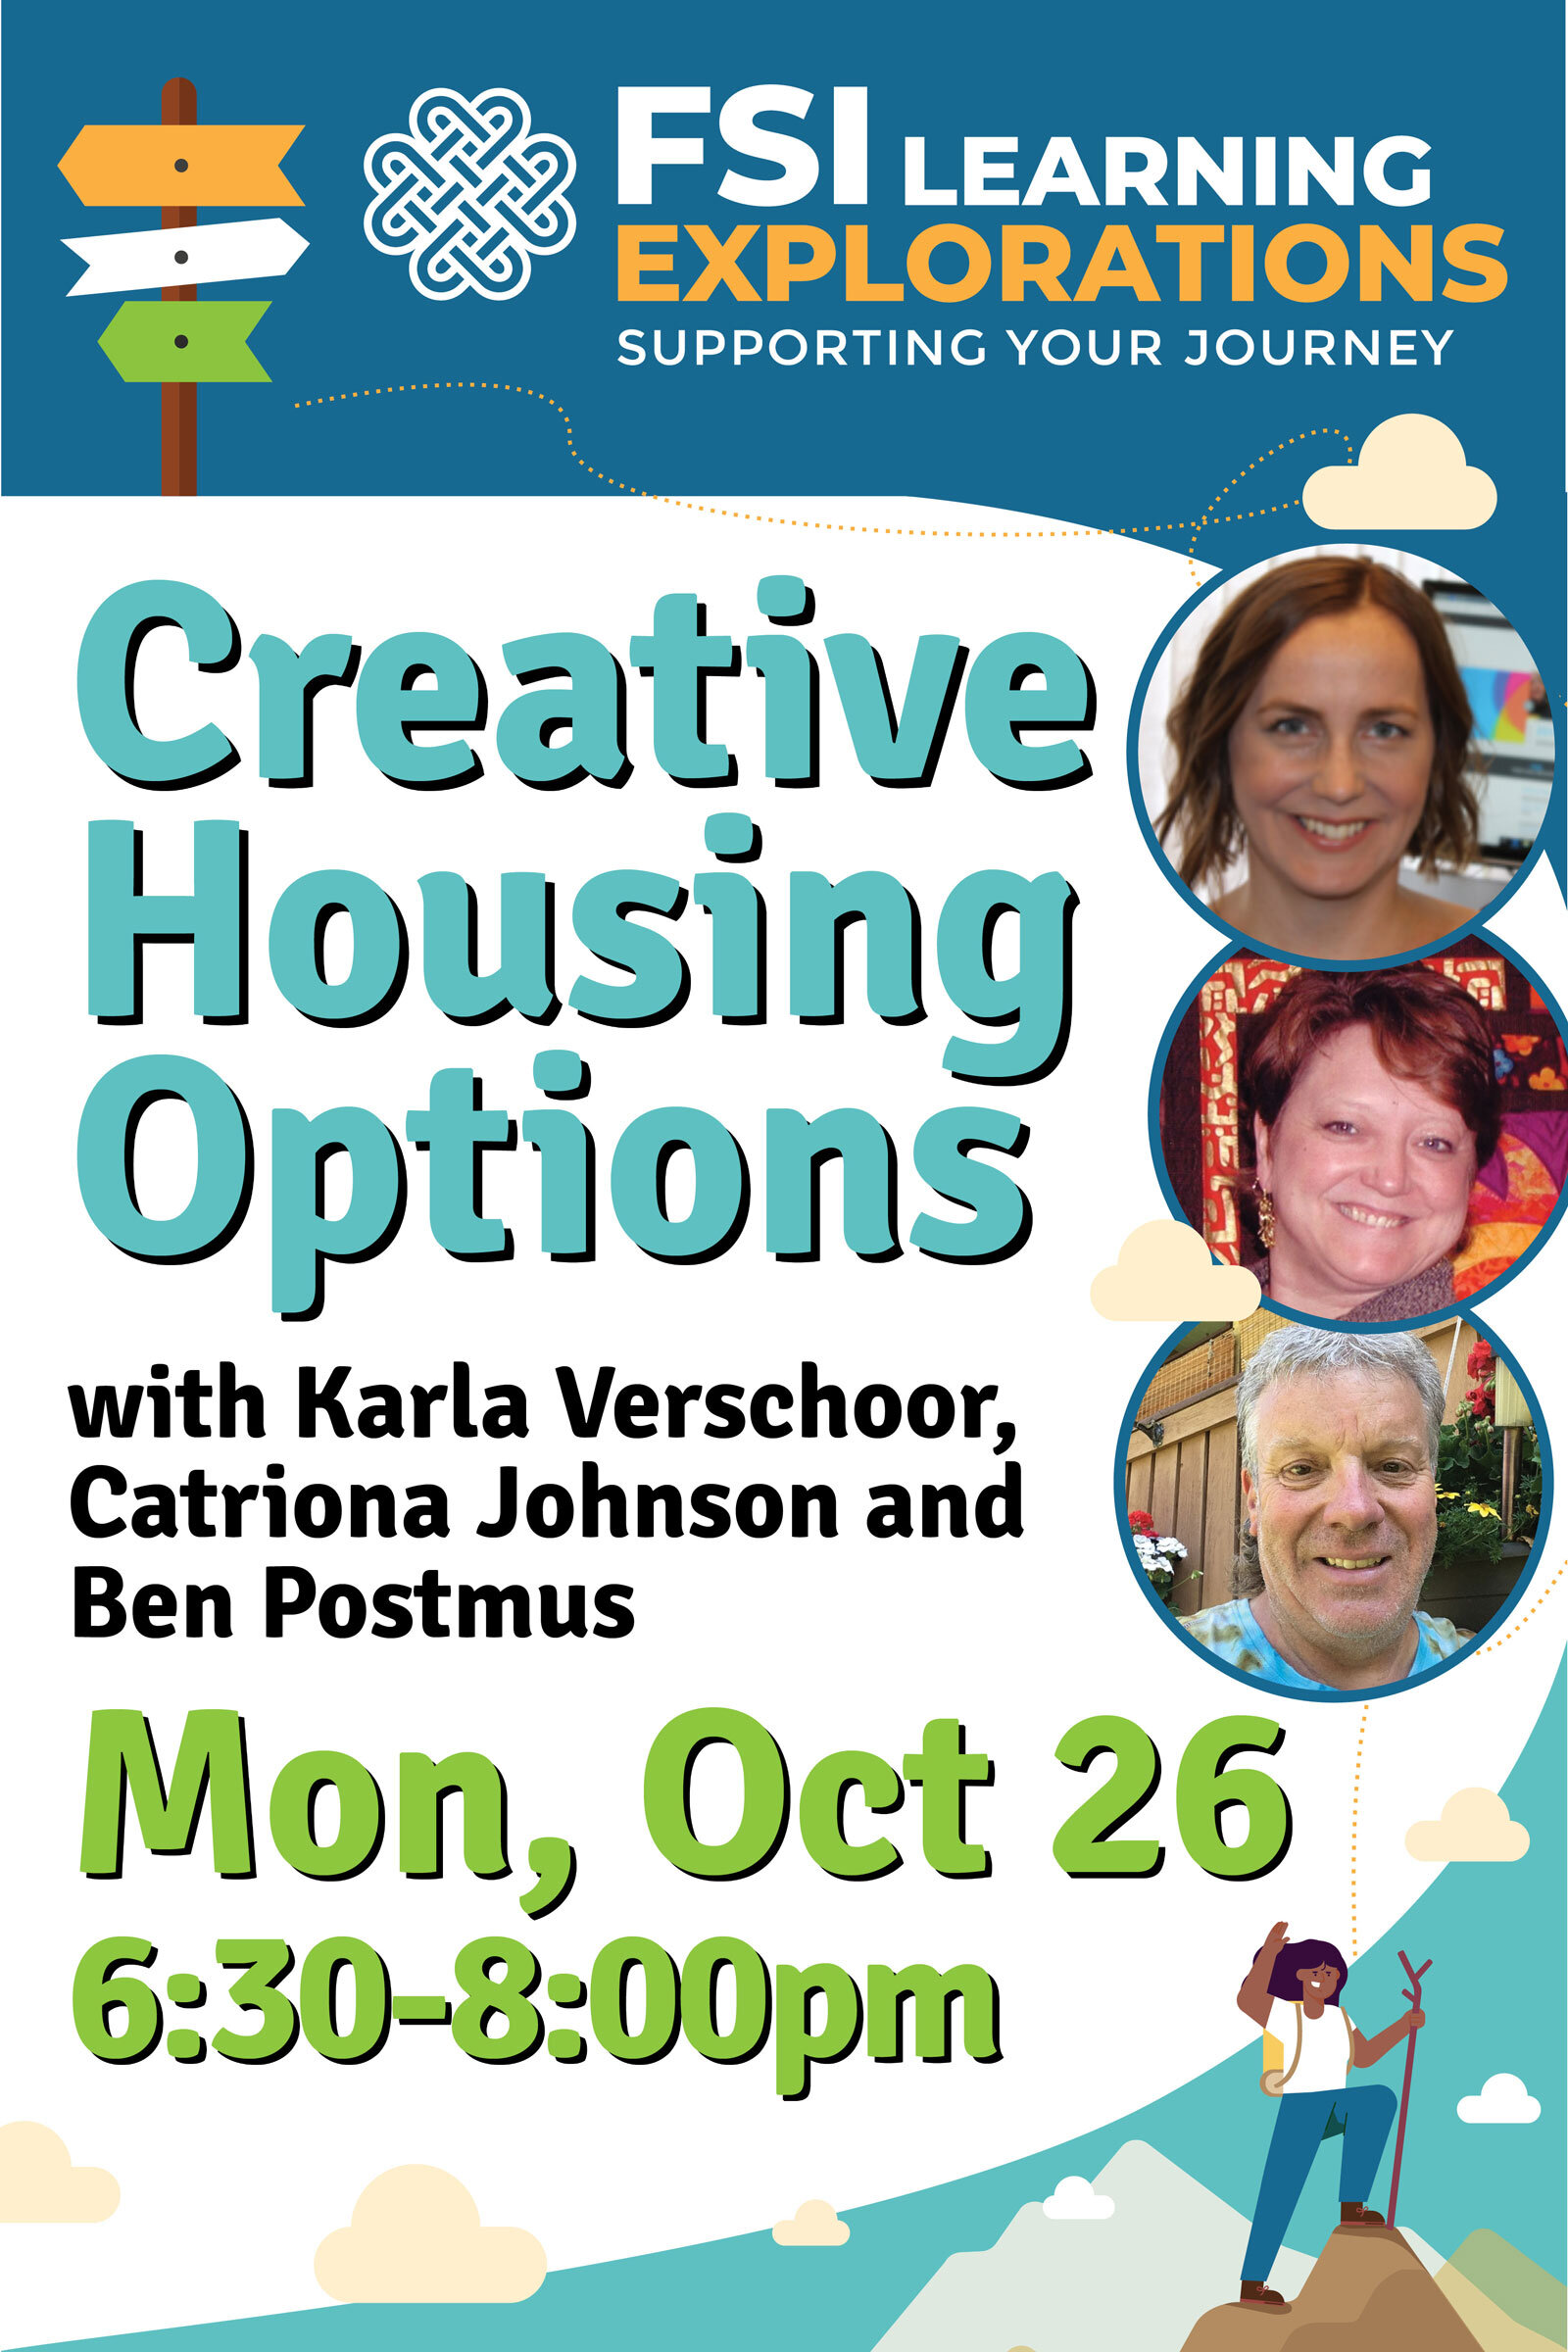 FSI Learning Explorations - Creative Housing Options